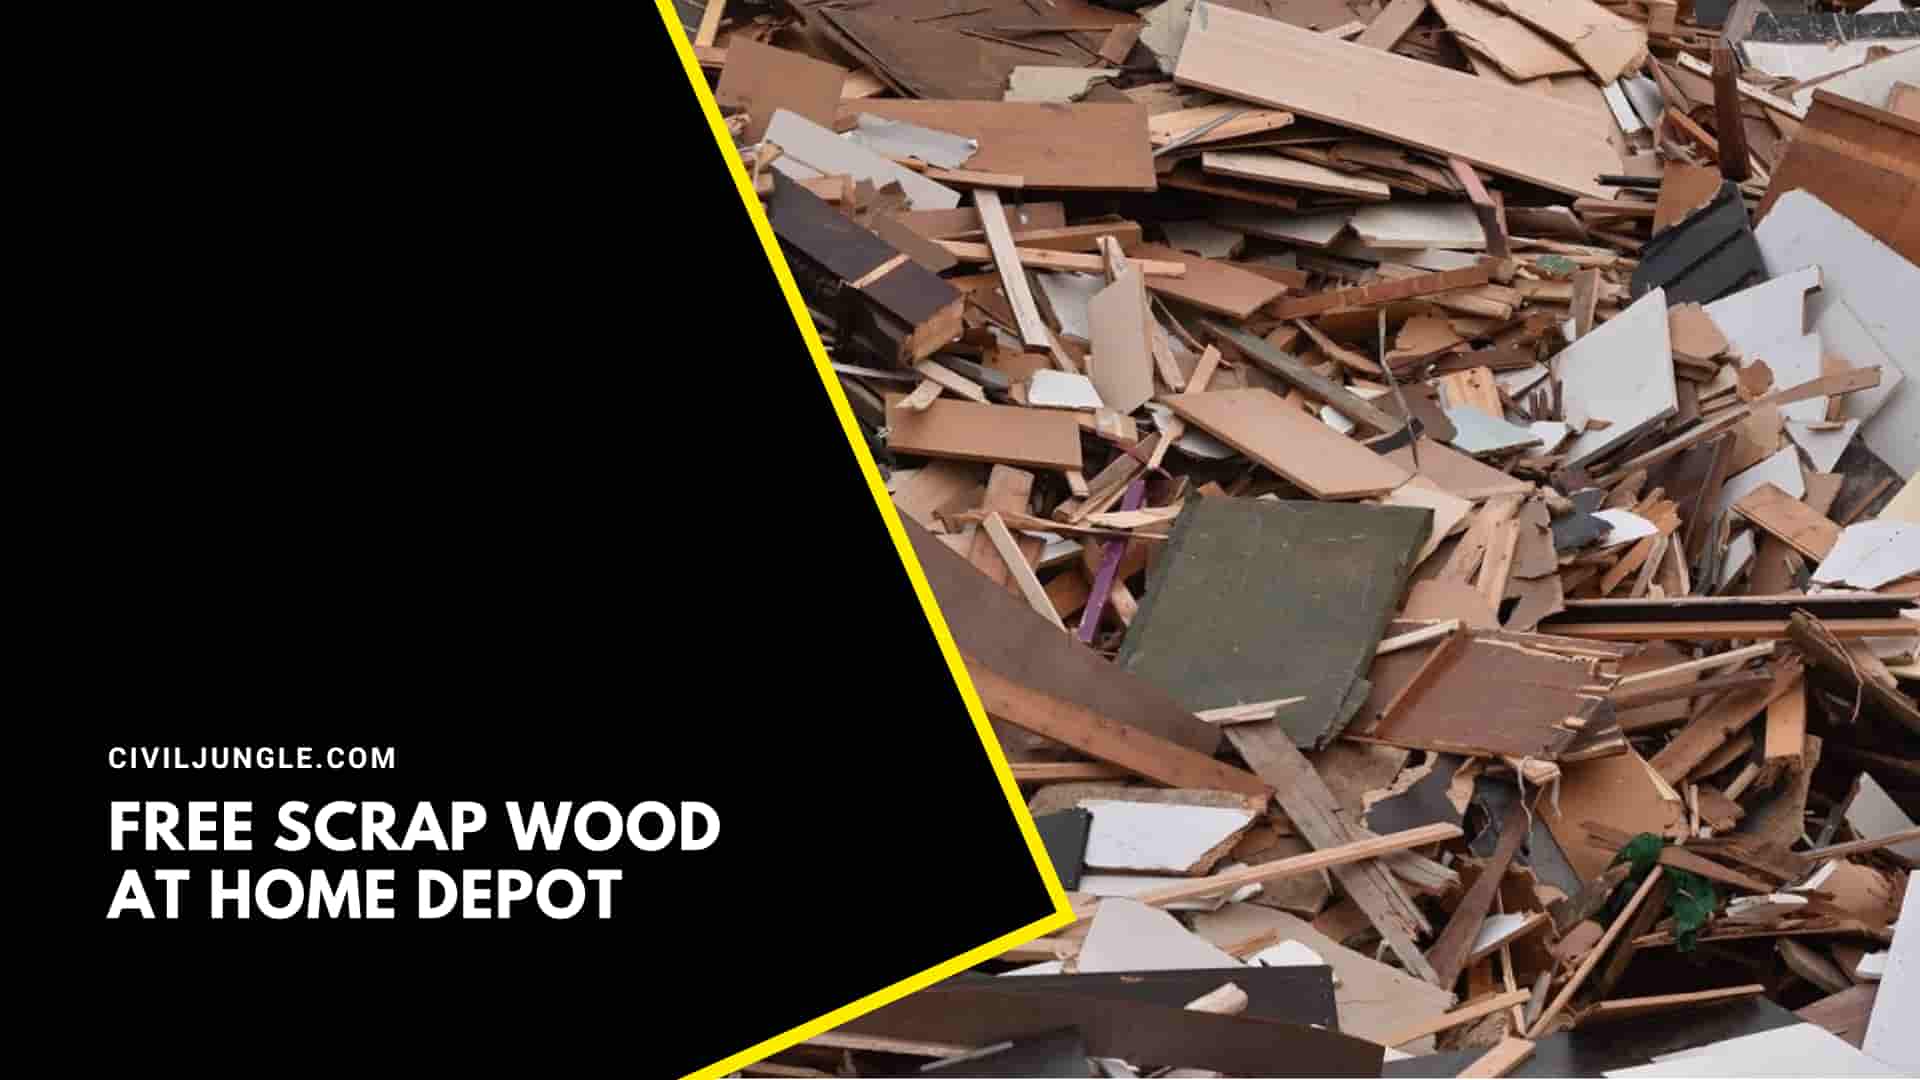 Free Scrap Wood at Home Depot